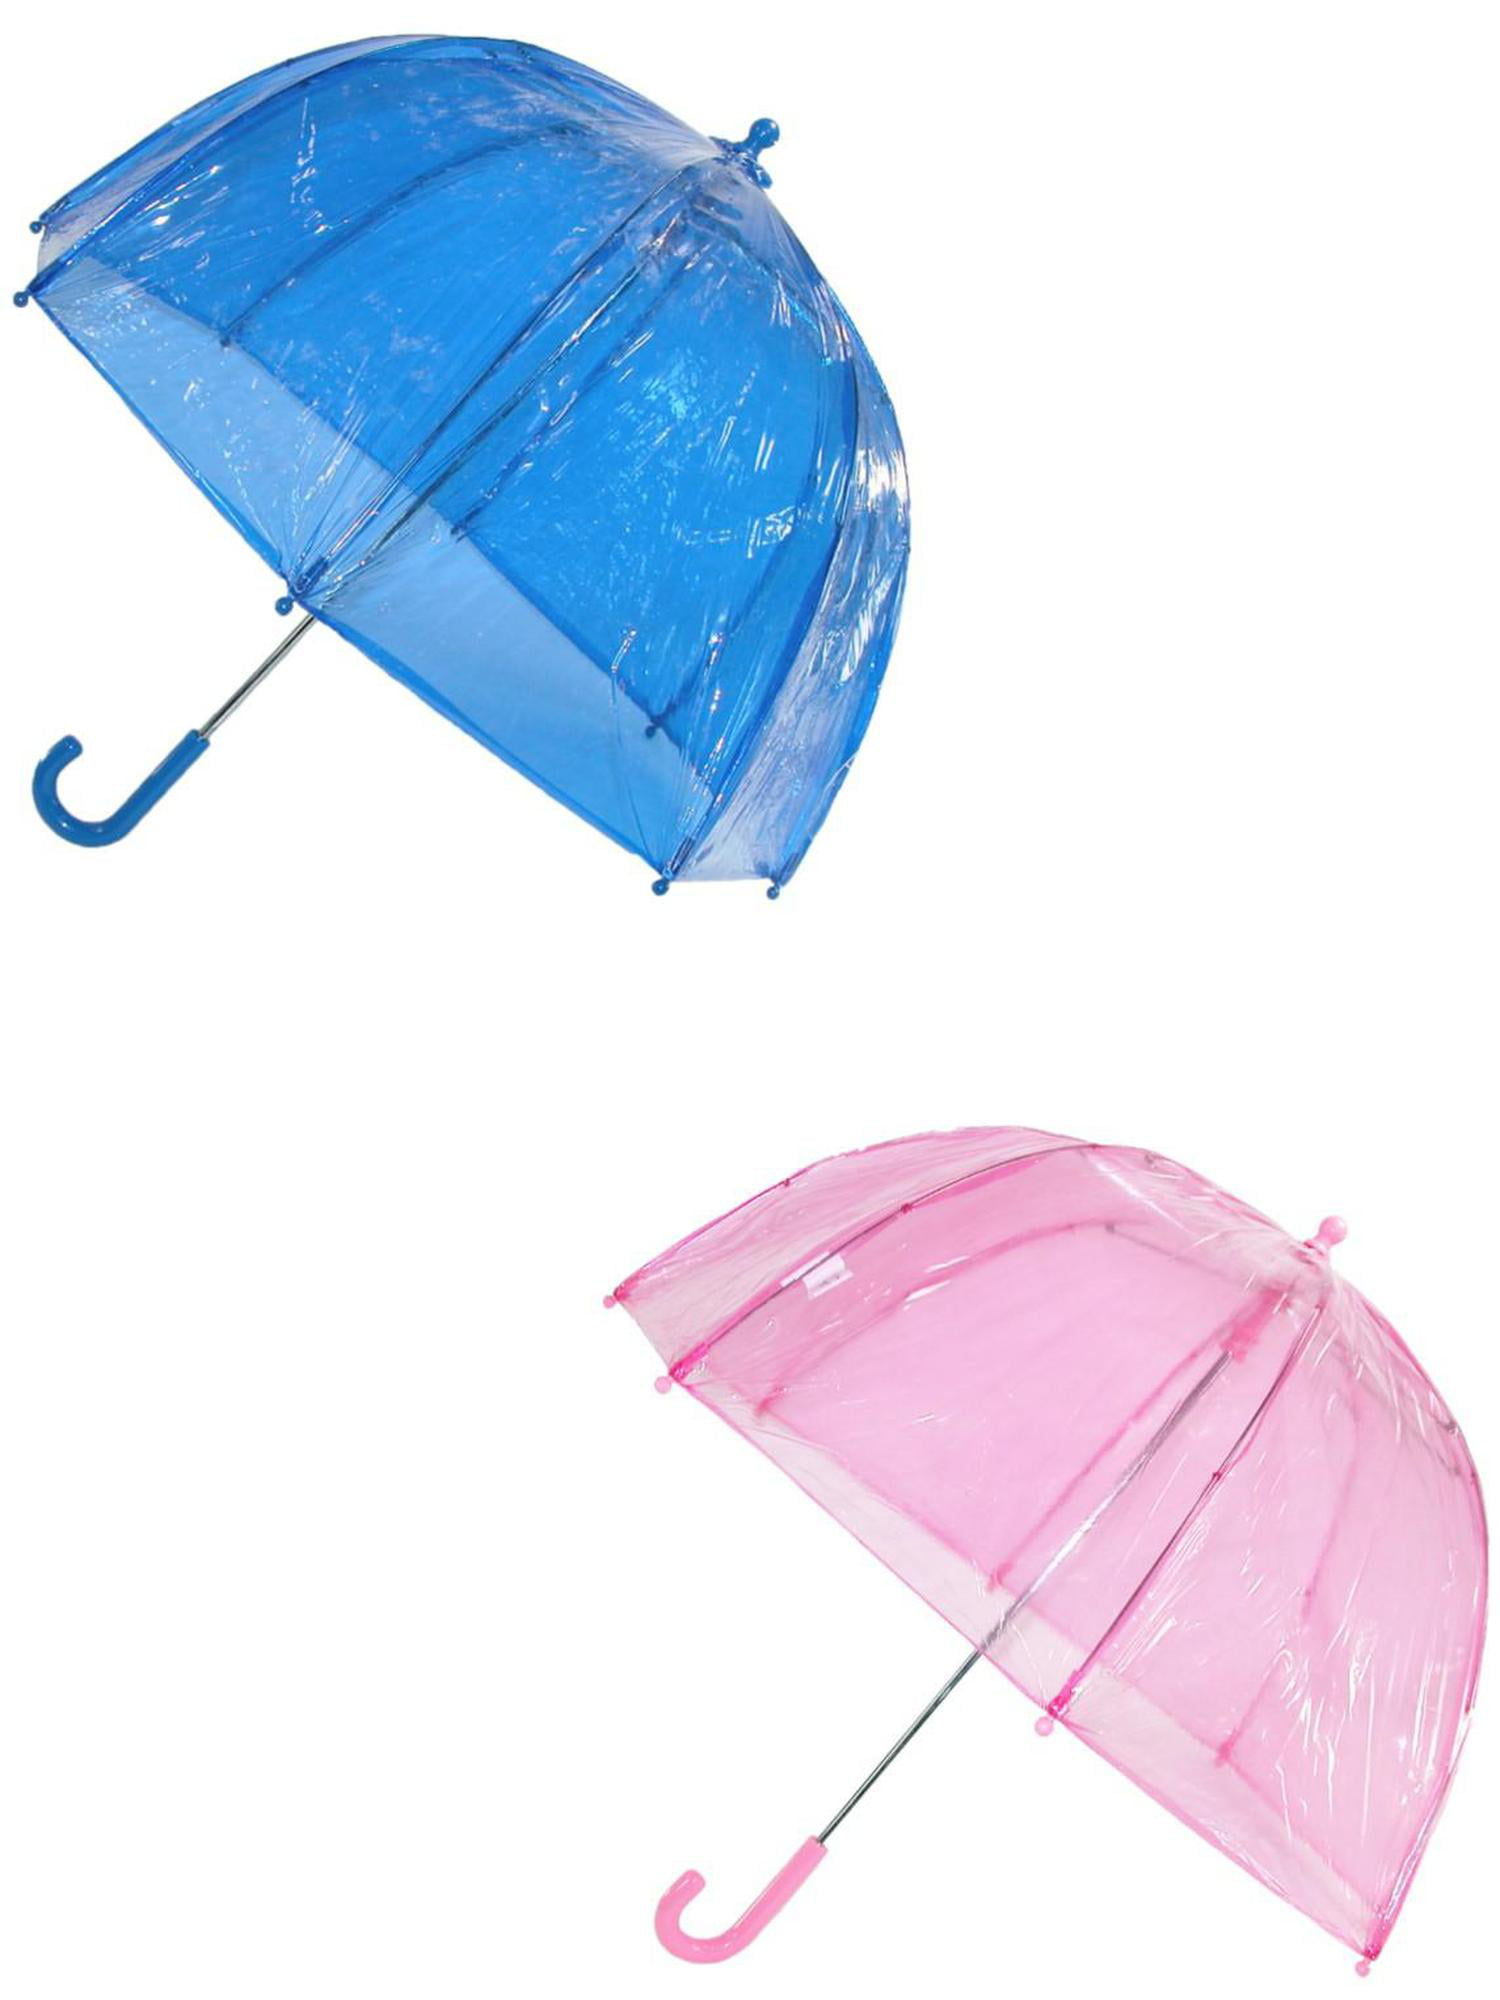 Accessories Umbrellas & Rain Accessories Ultralight Opaque Splash-Proof Umbrella 